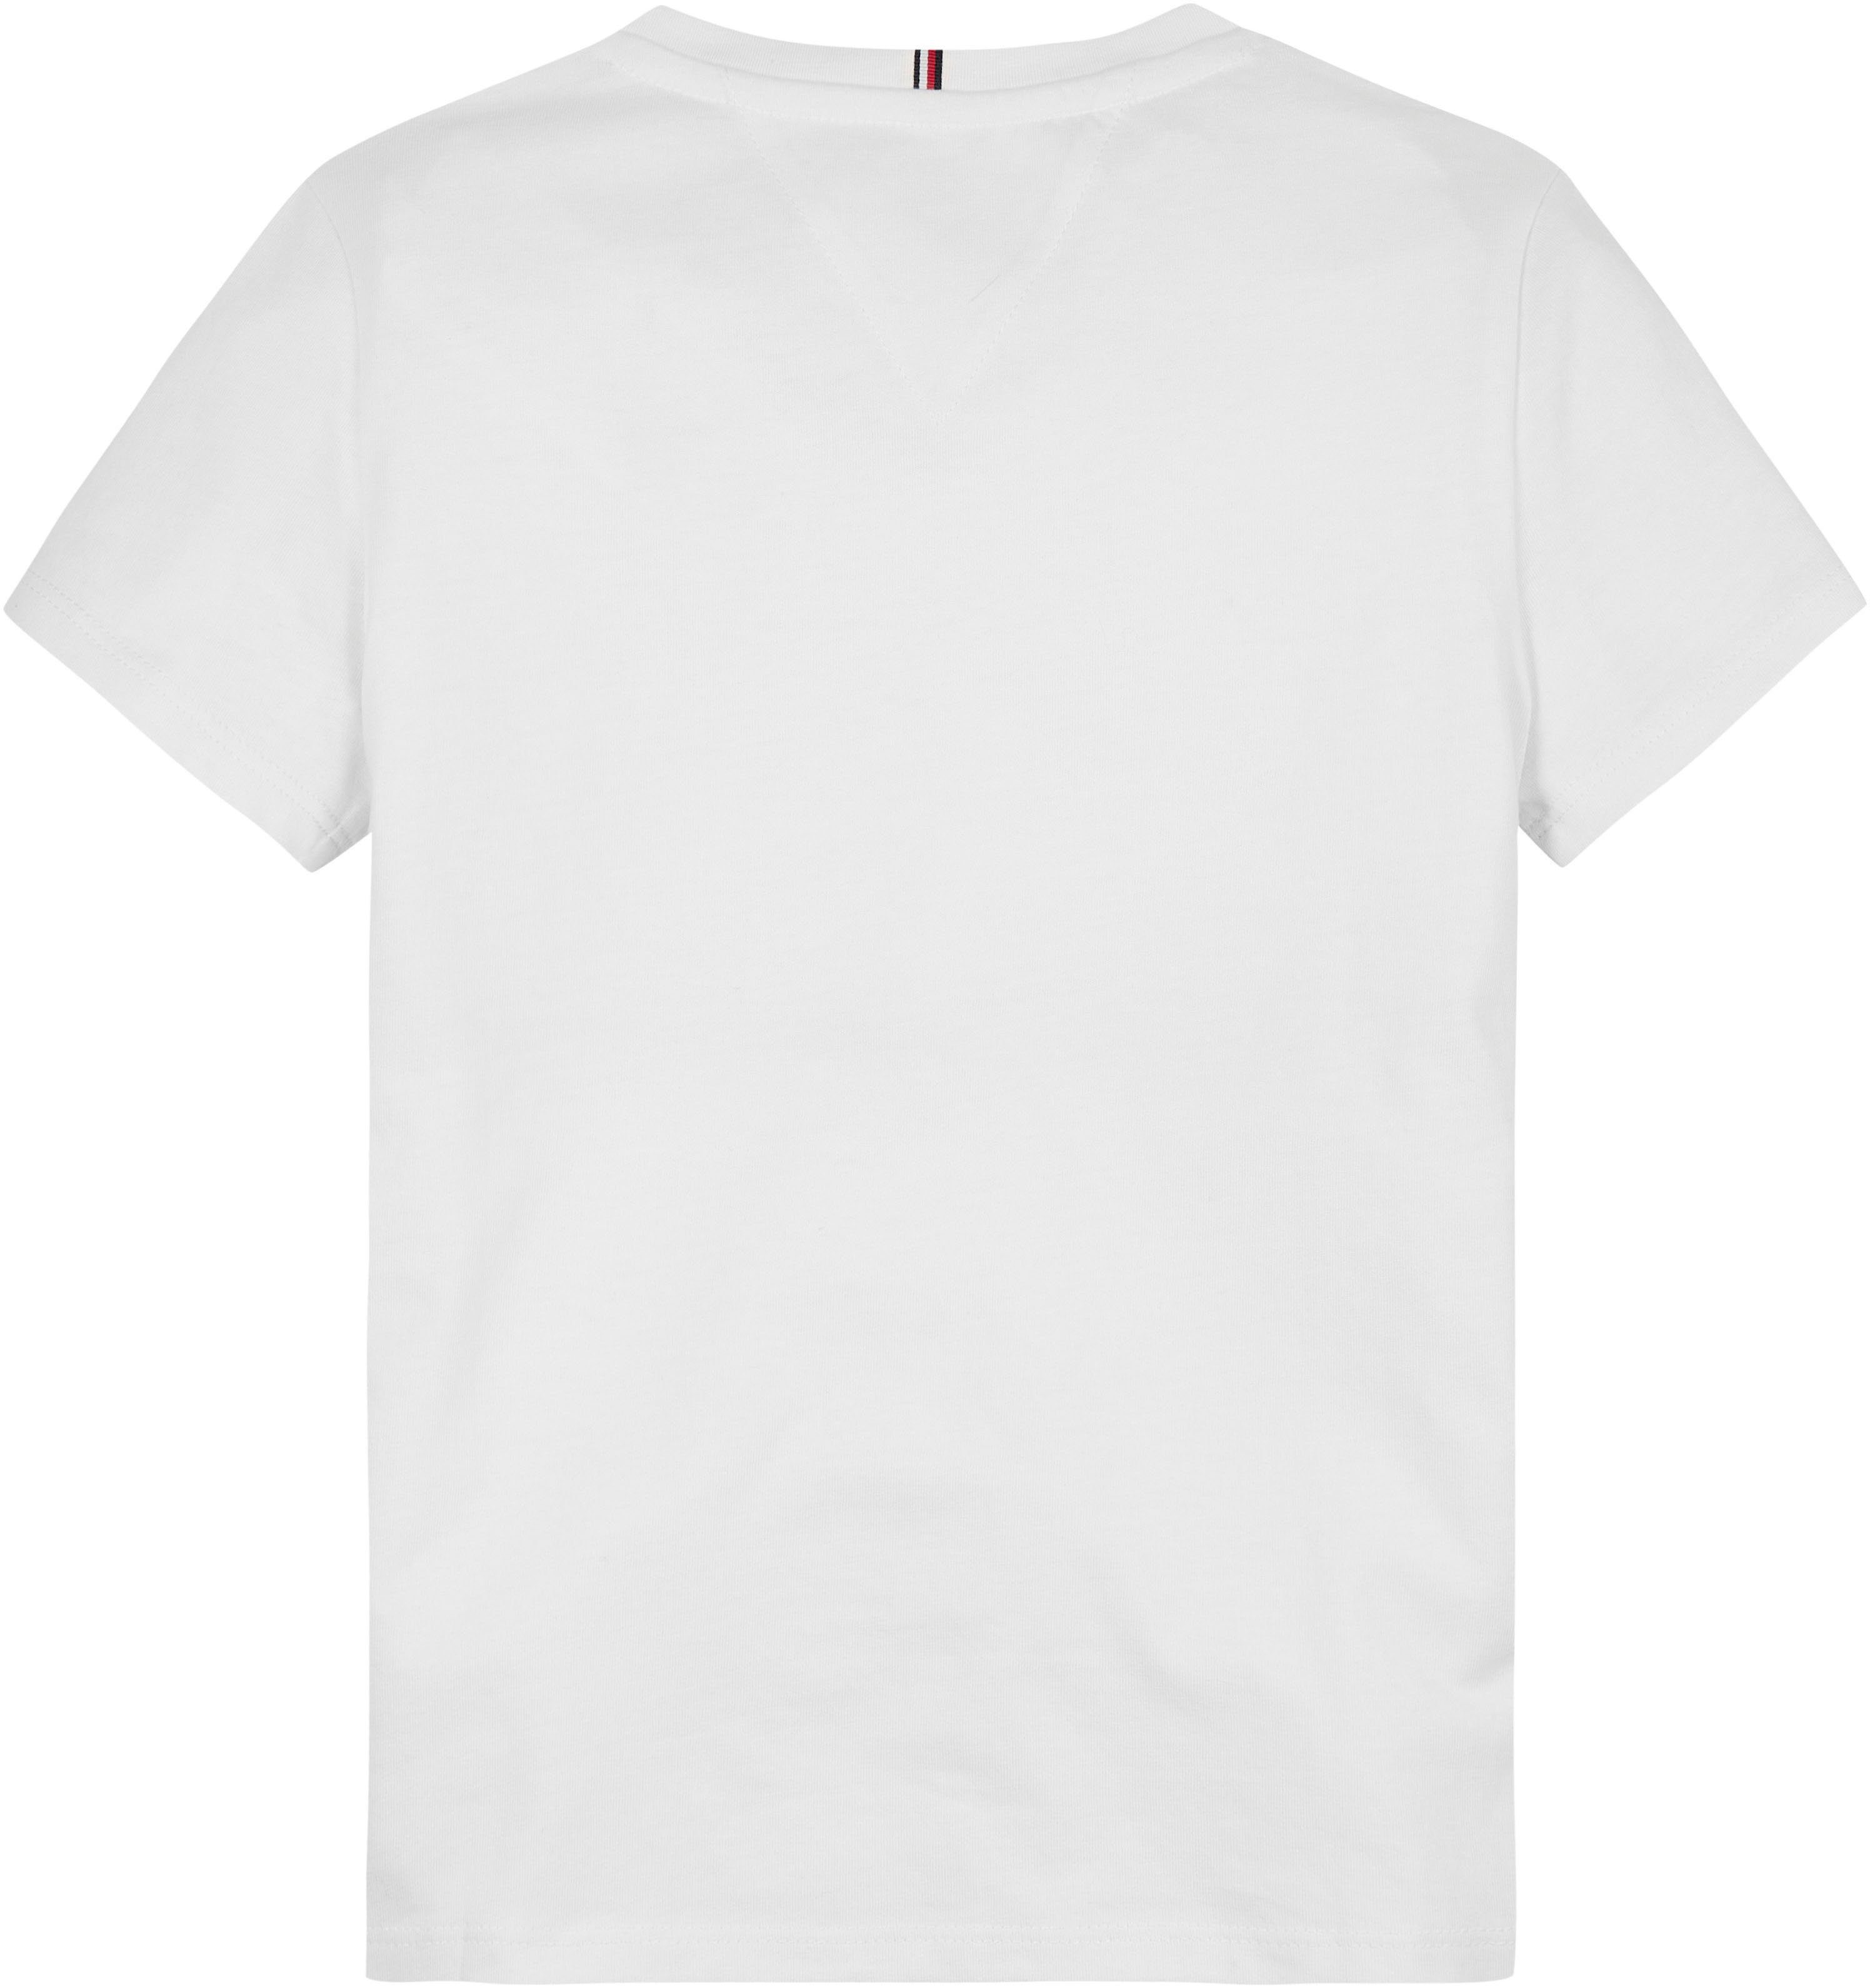 Tommy Hilfiger T-Shirt HILFIGER SCRIPT white S/S TEE